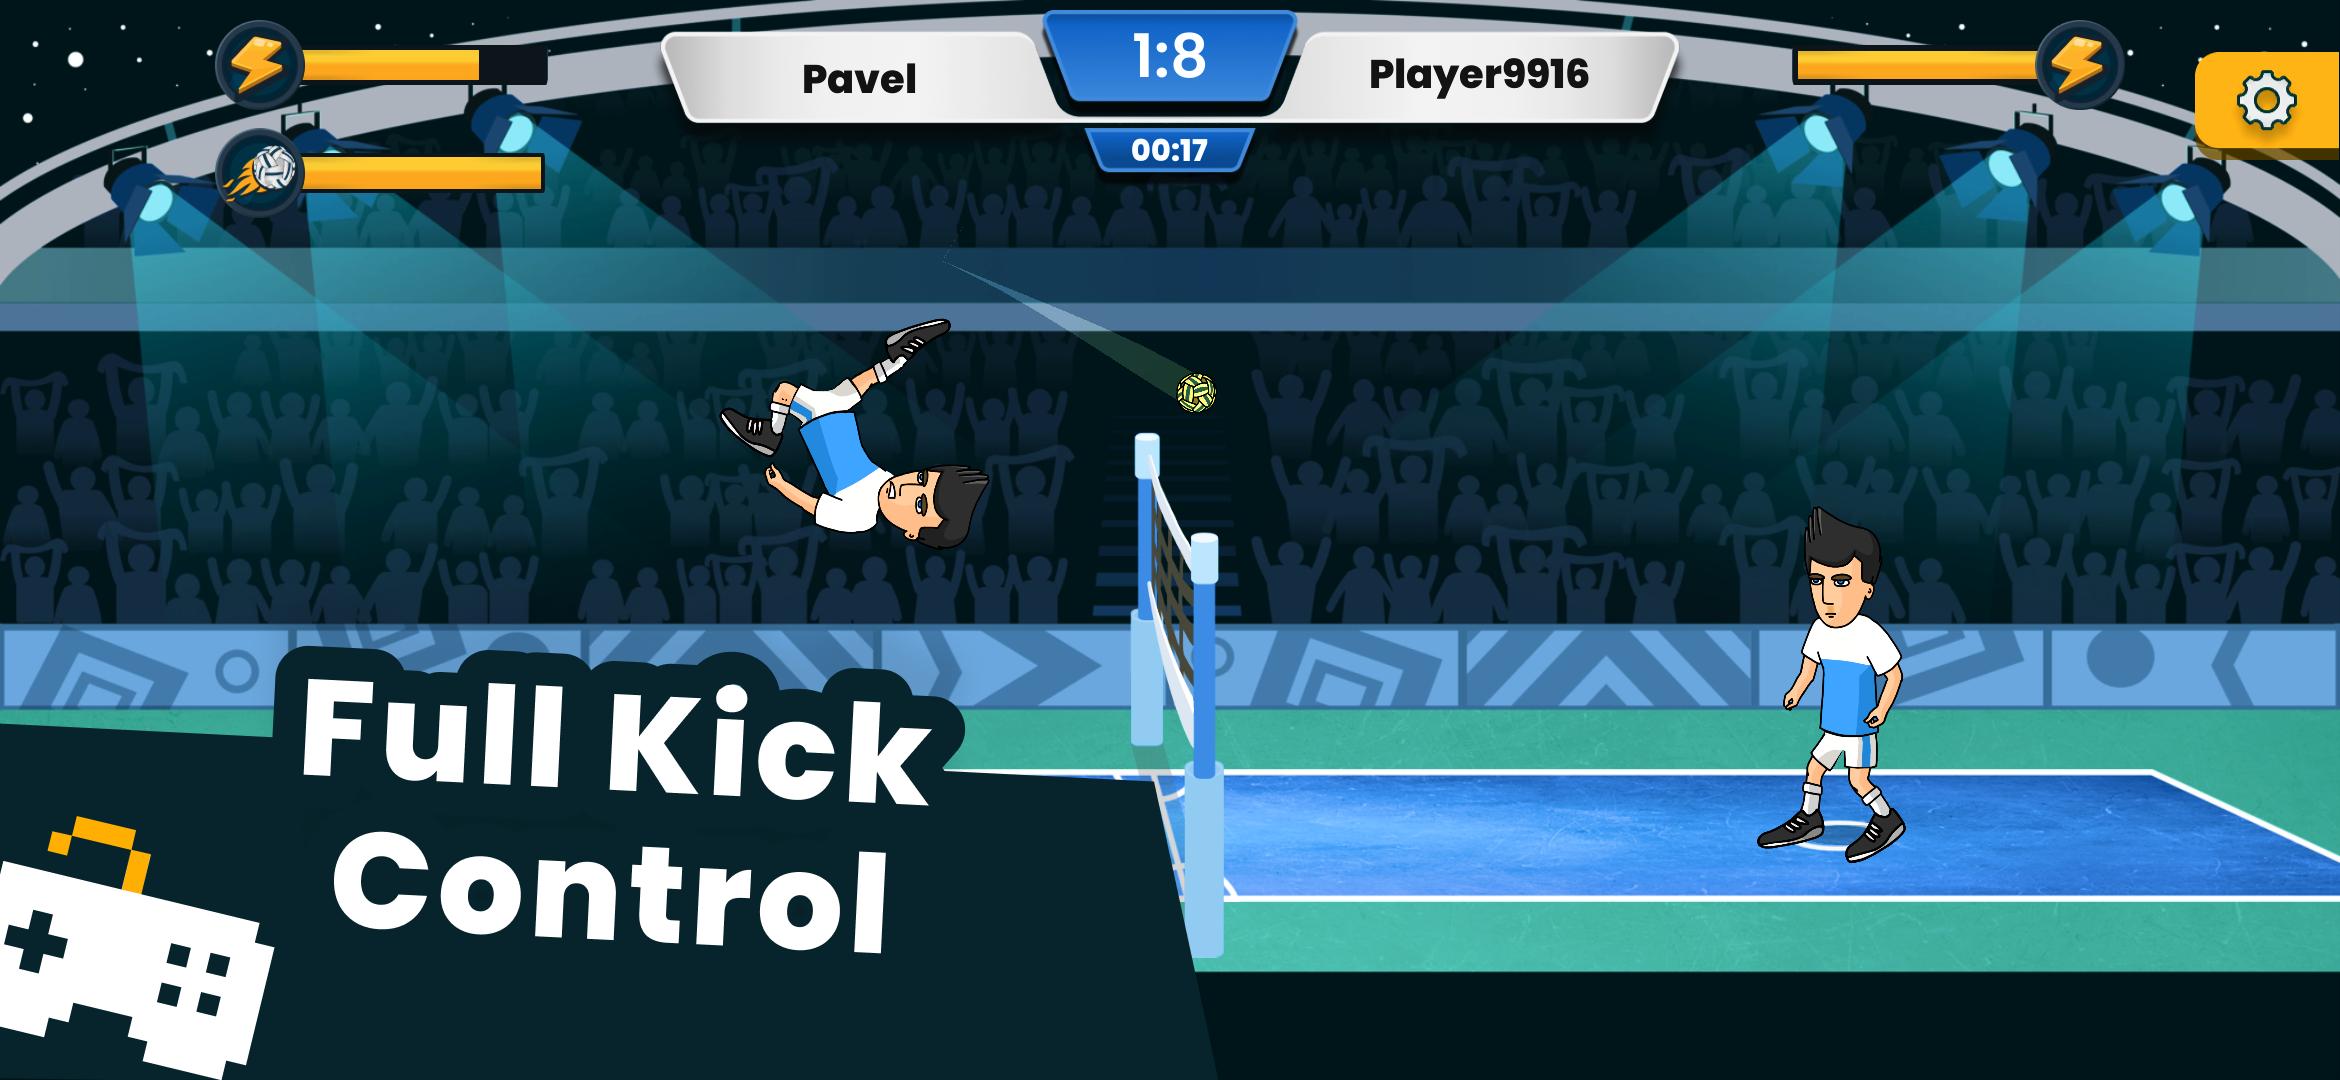 Sepak soccer: street challenge sports game 0.41.3 Screenshot 12